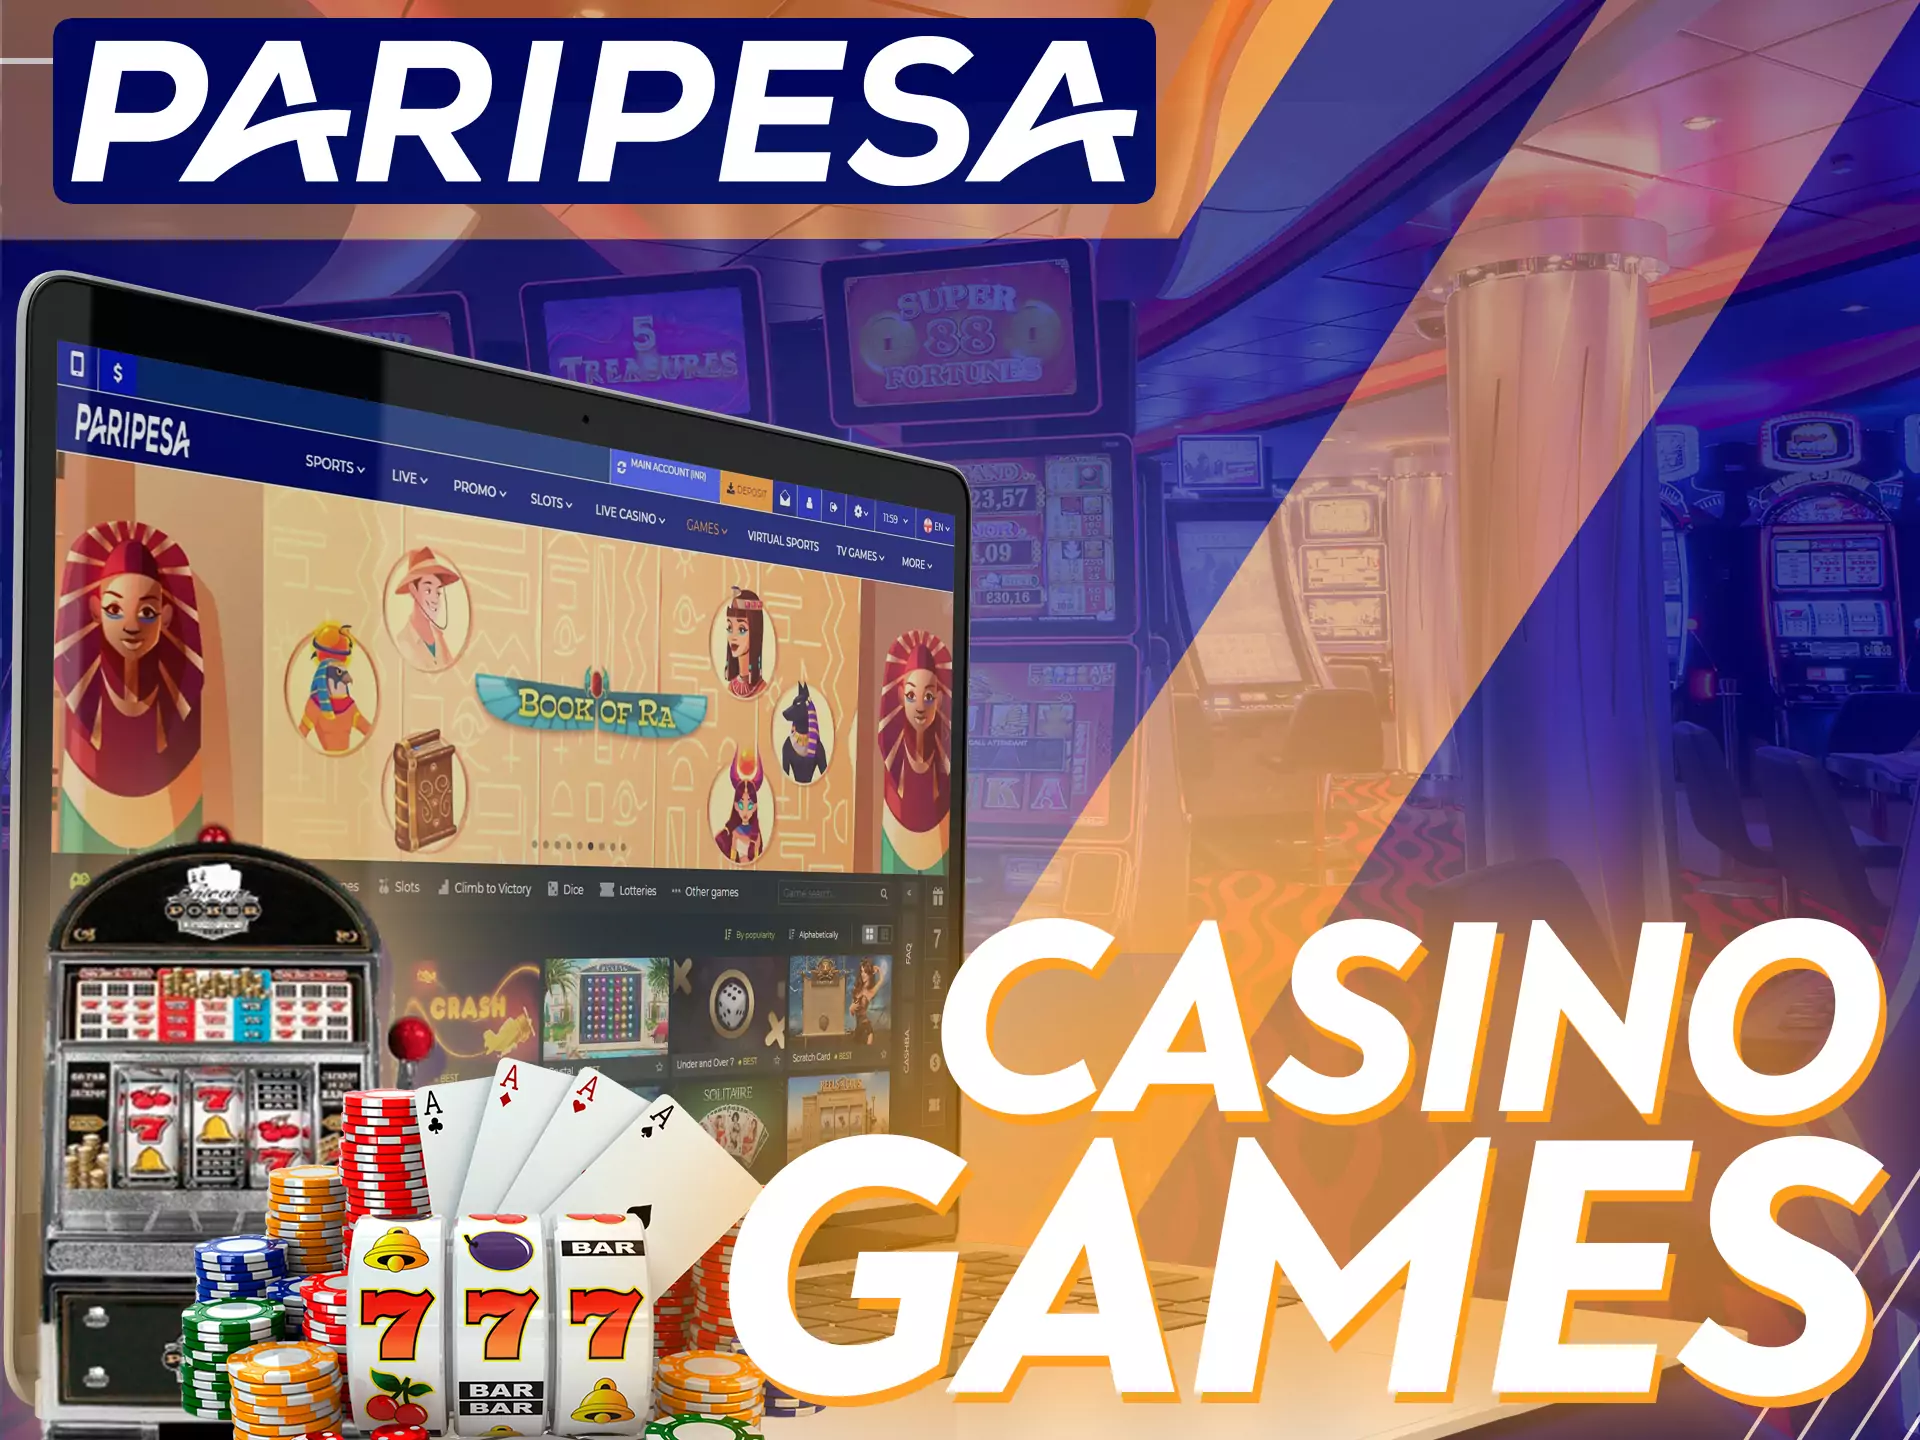 At Paripesa, play a variety of casino games.